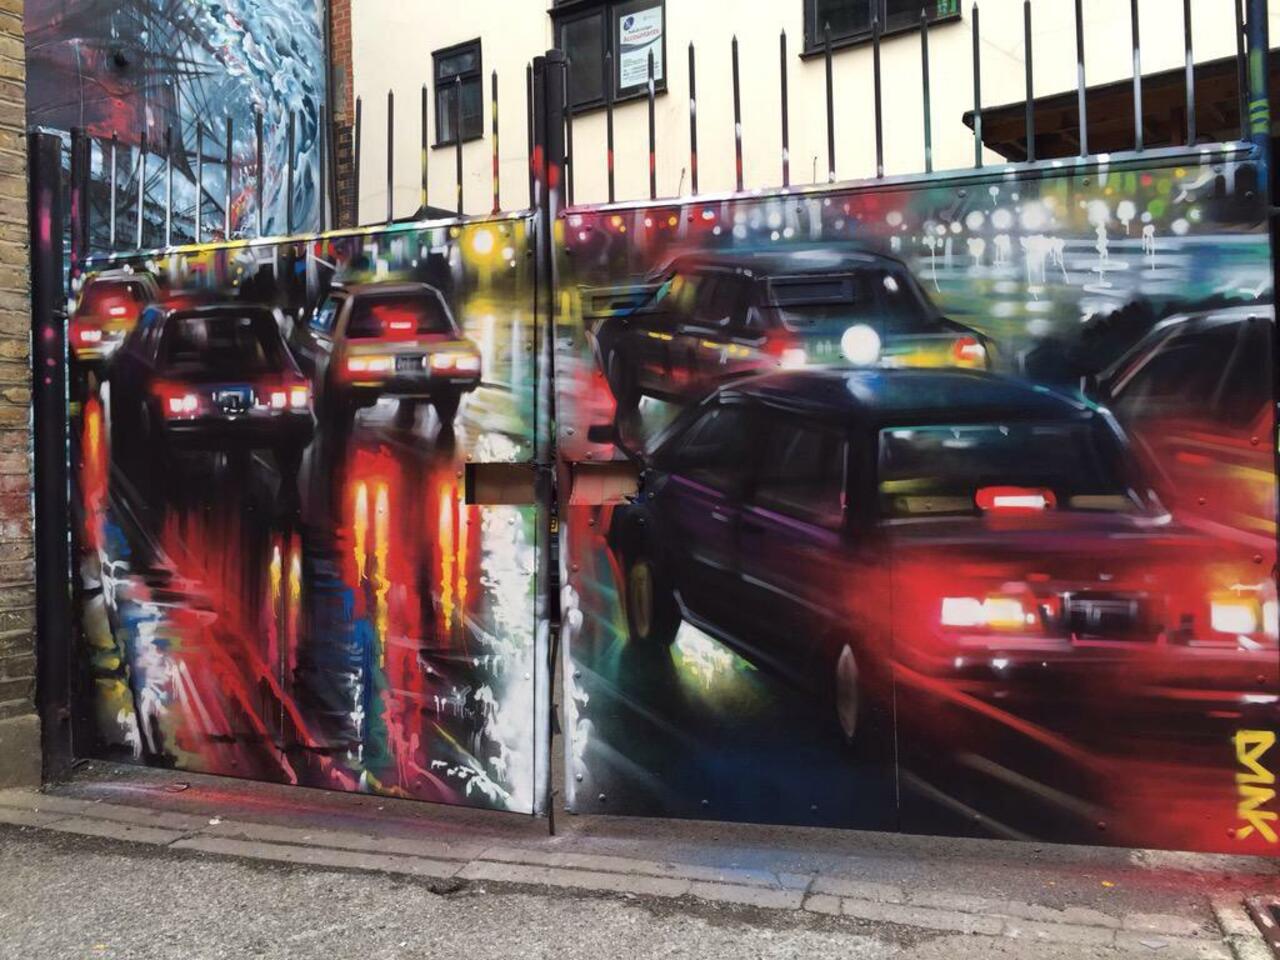 New Street Art by DanKitchener in Brick Lane London 

#art #graffiti #mural #streetart http://t.co/oiwAdxfAQL